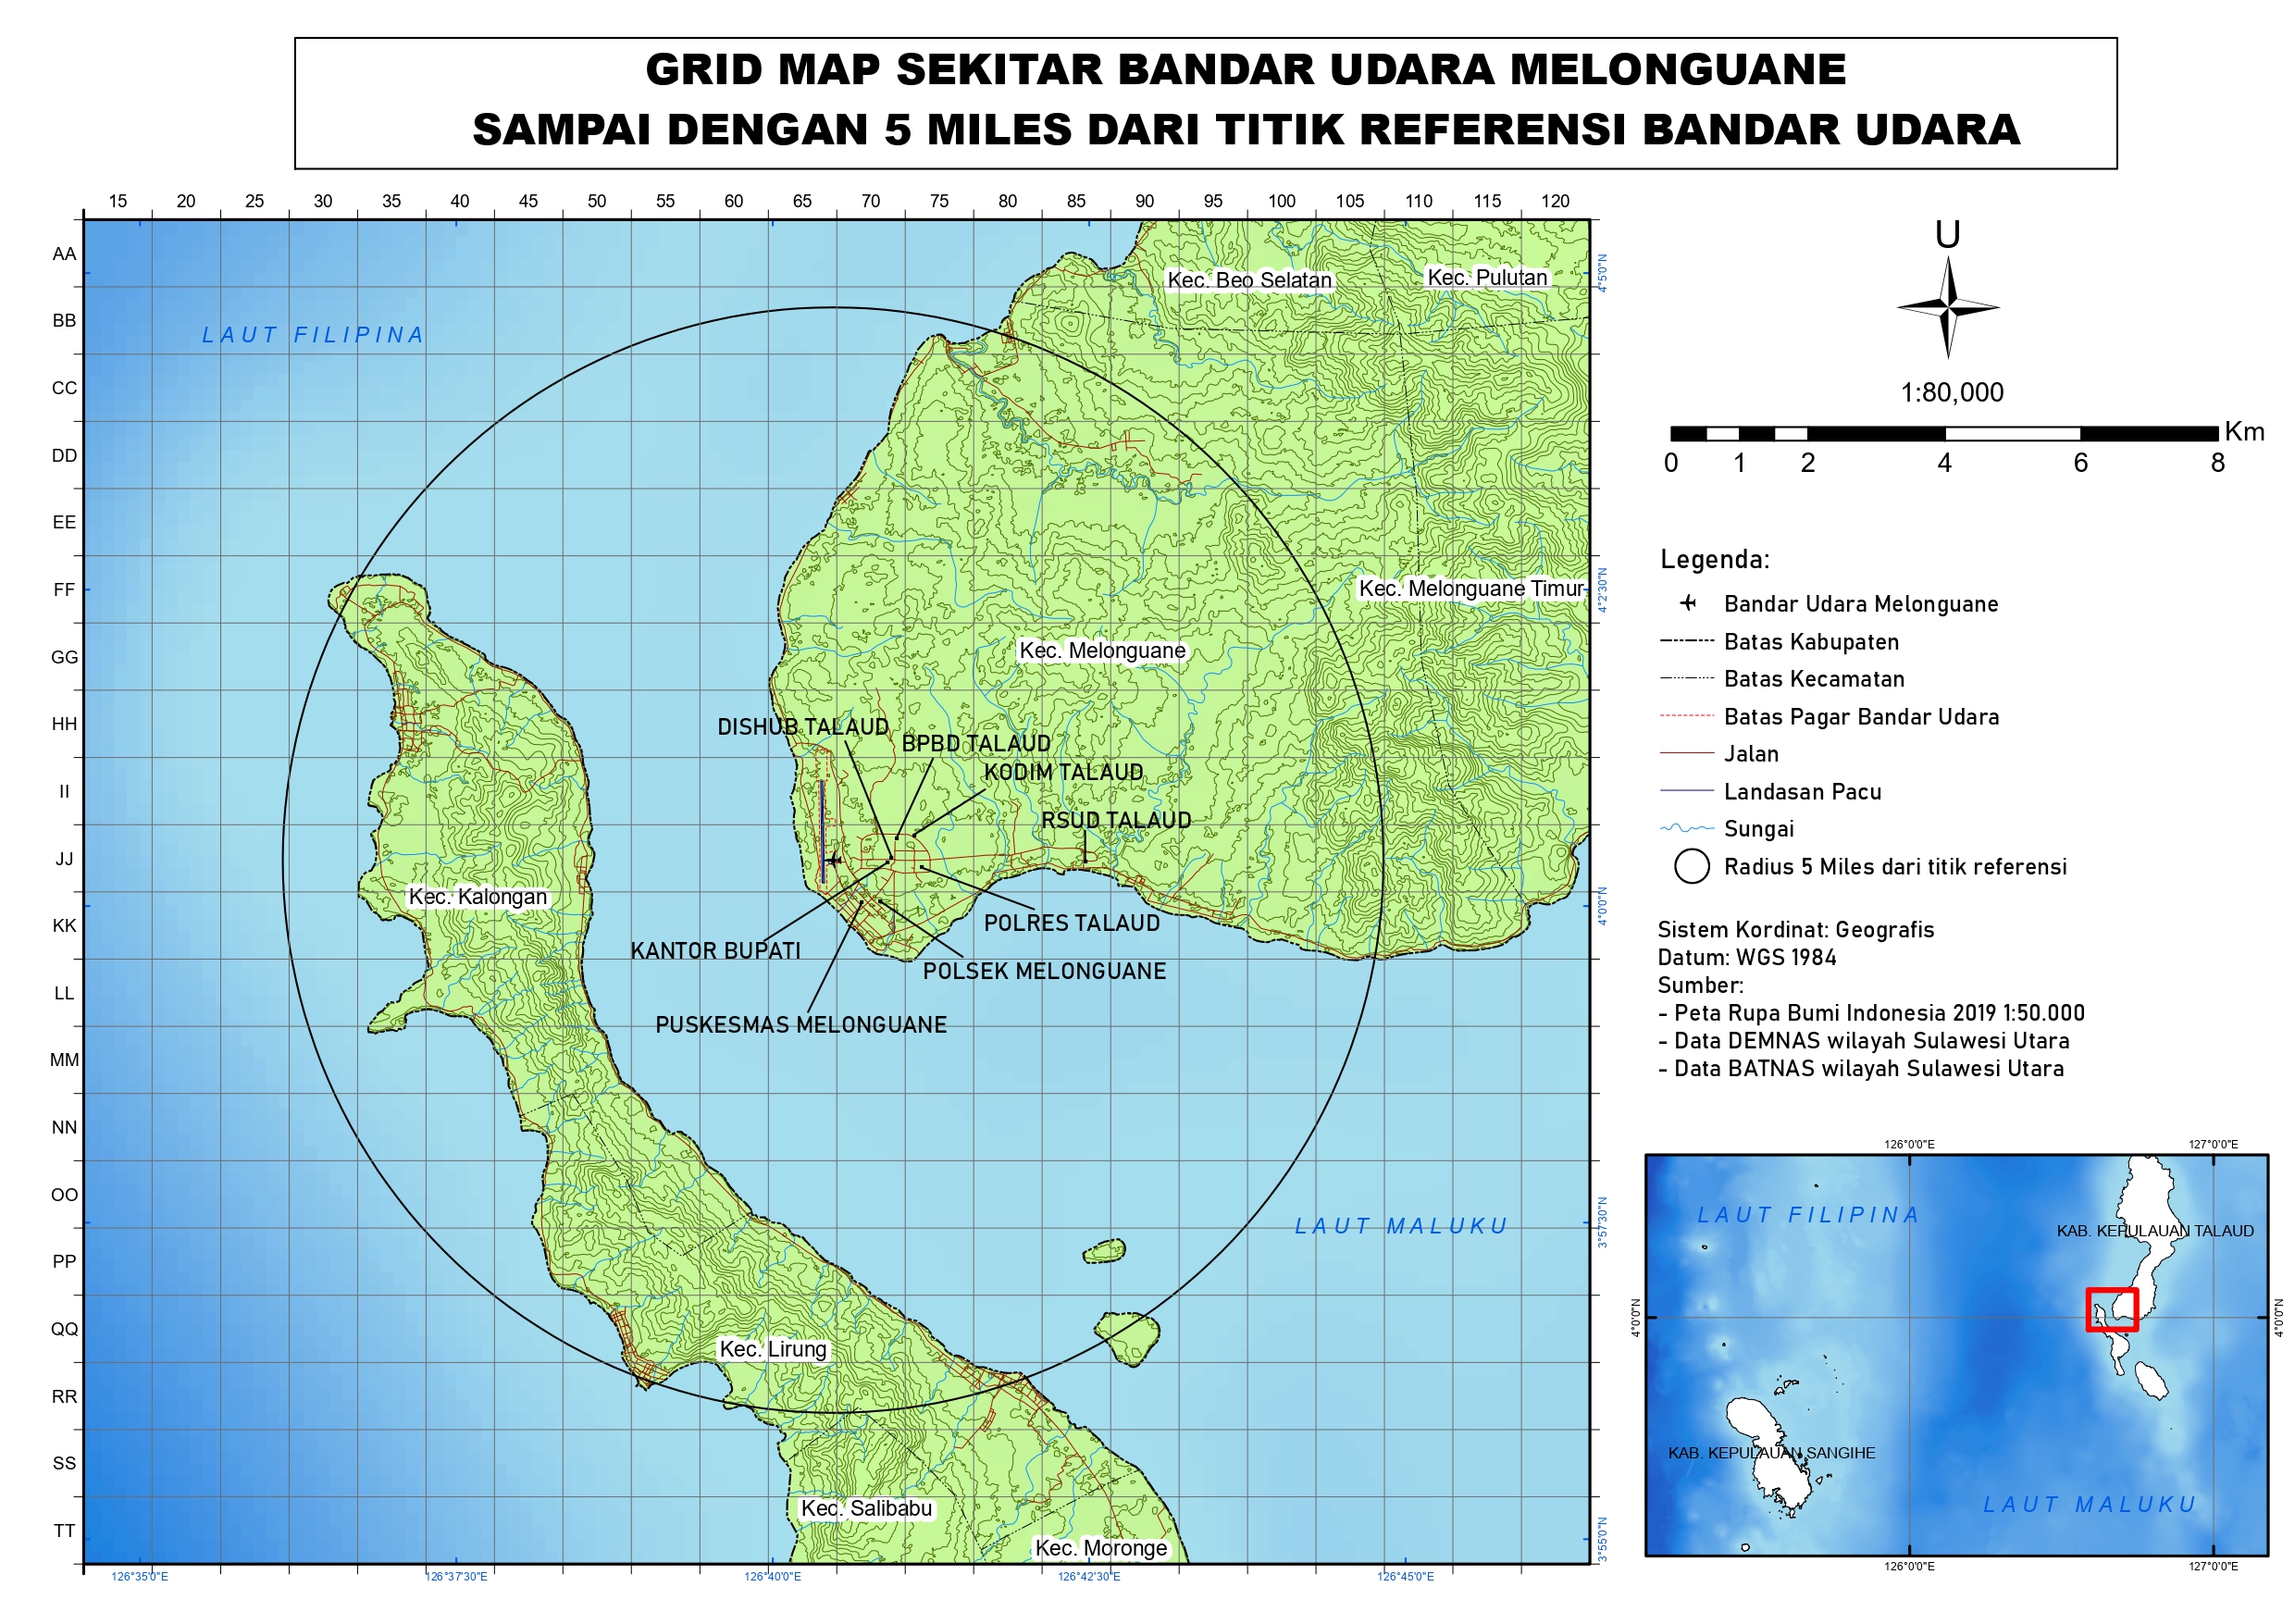 Gambar Peta Bandara GRID MAP 5 MILES_BANDARA MELONGUANE